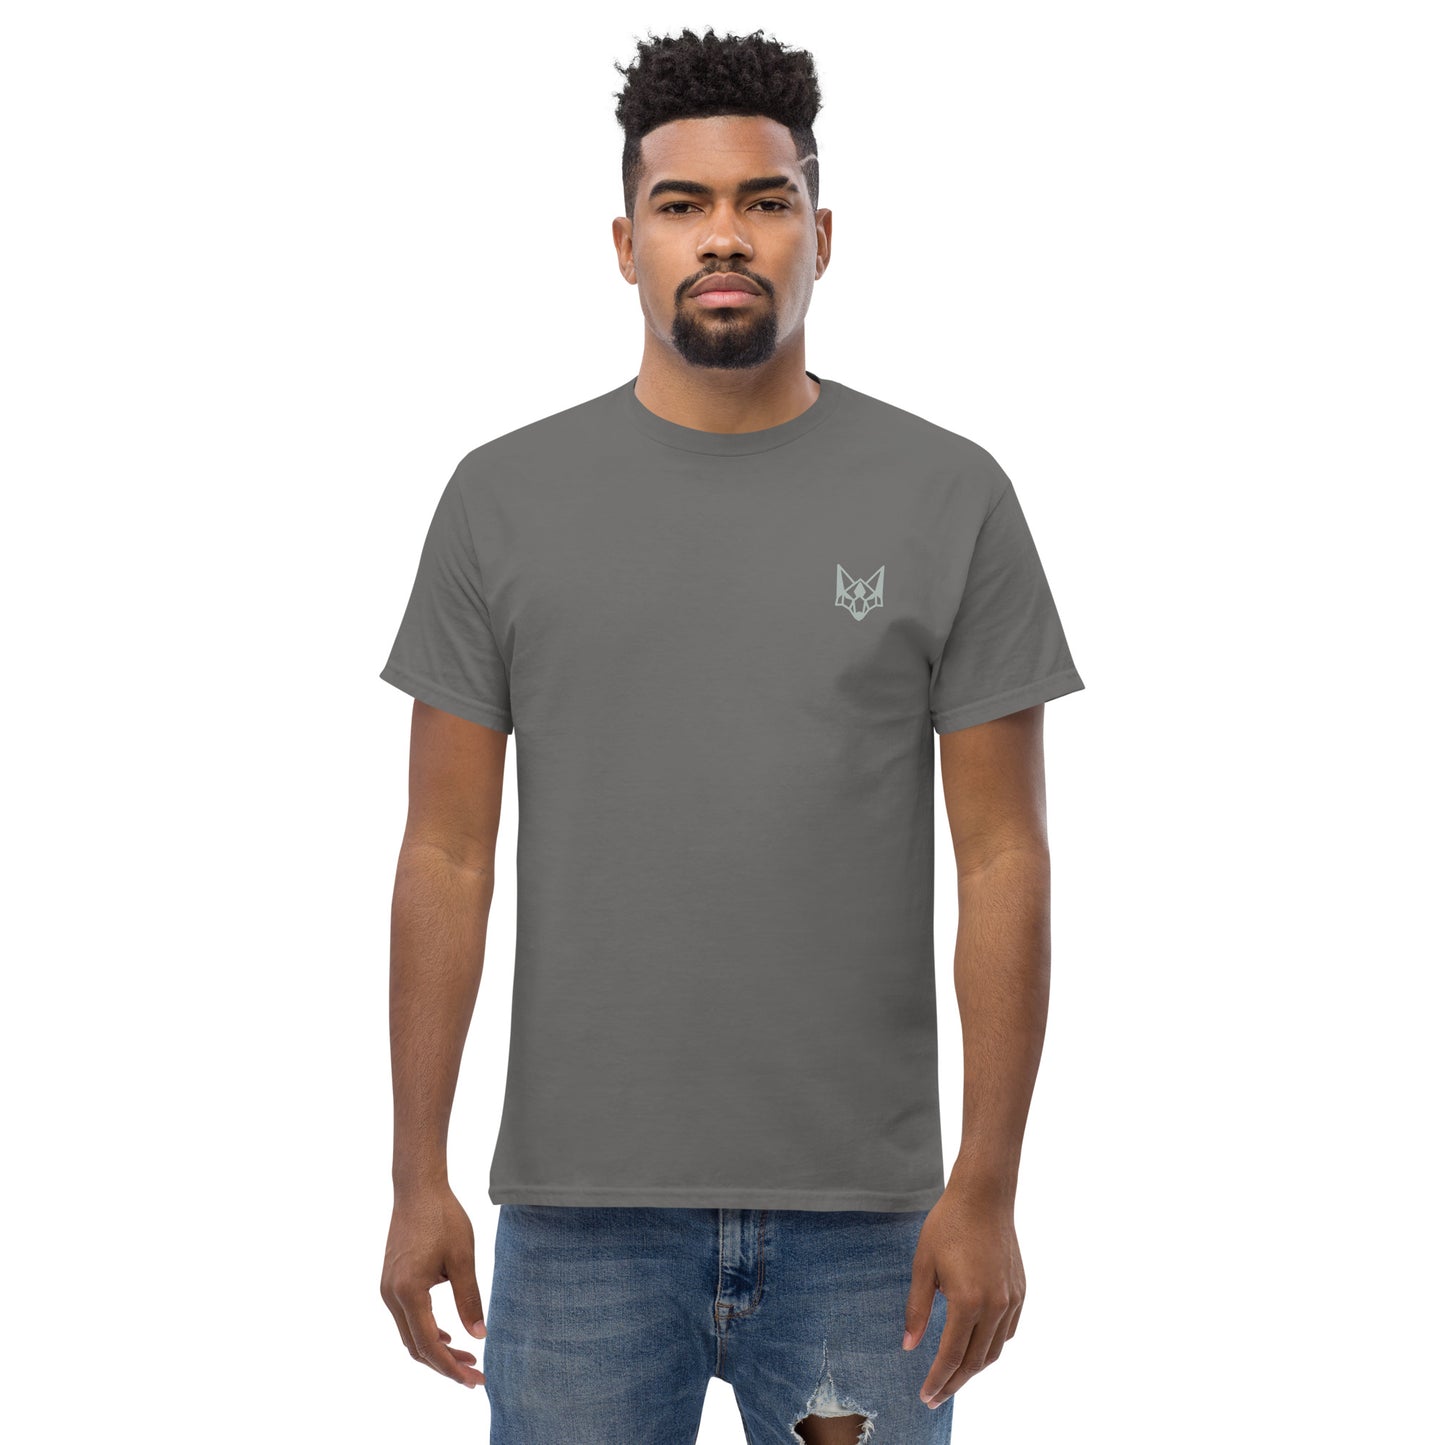 Hilltop Fox Camiseta clásica para hombre